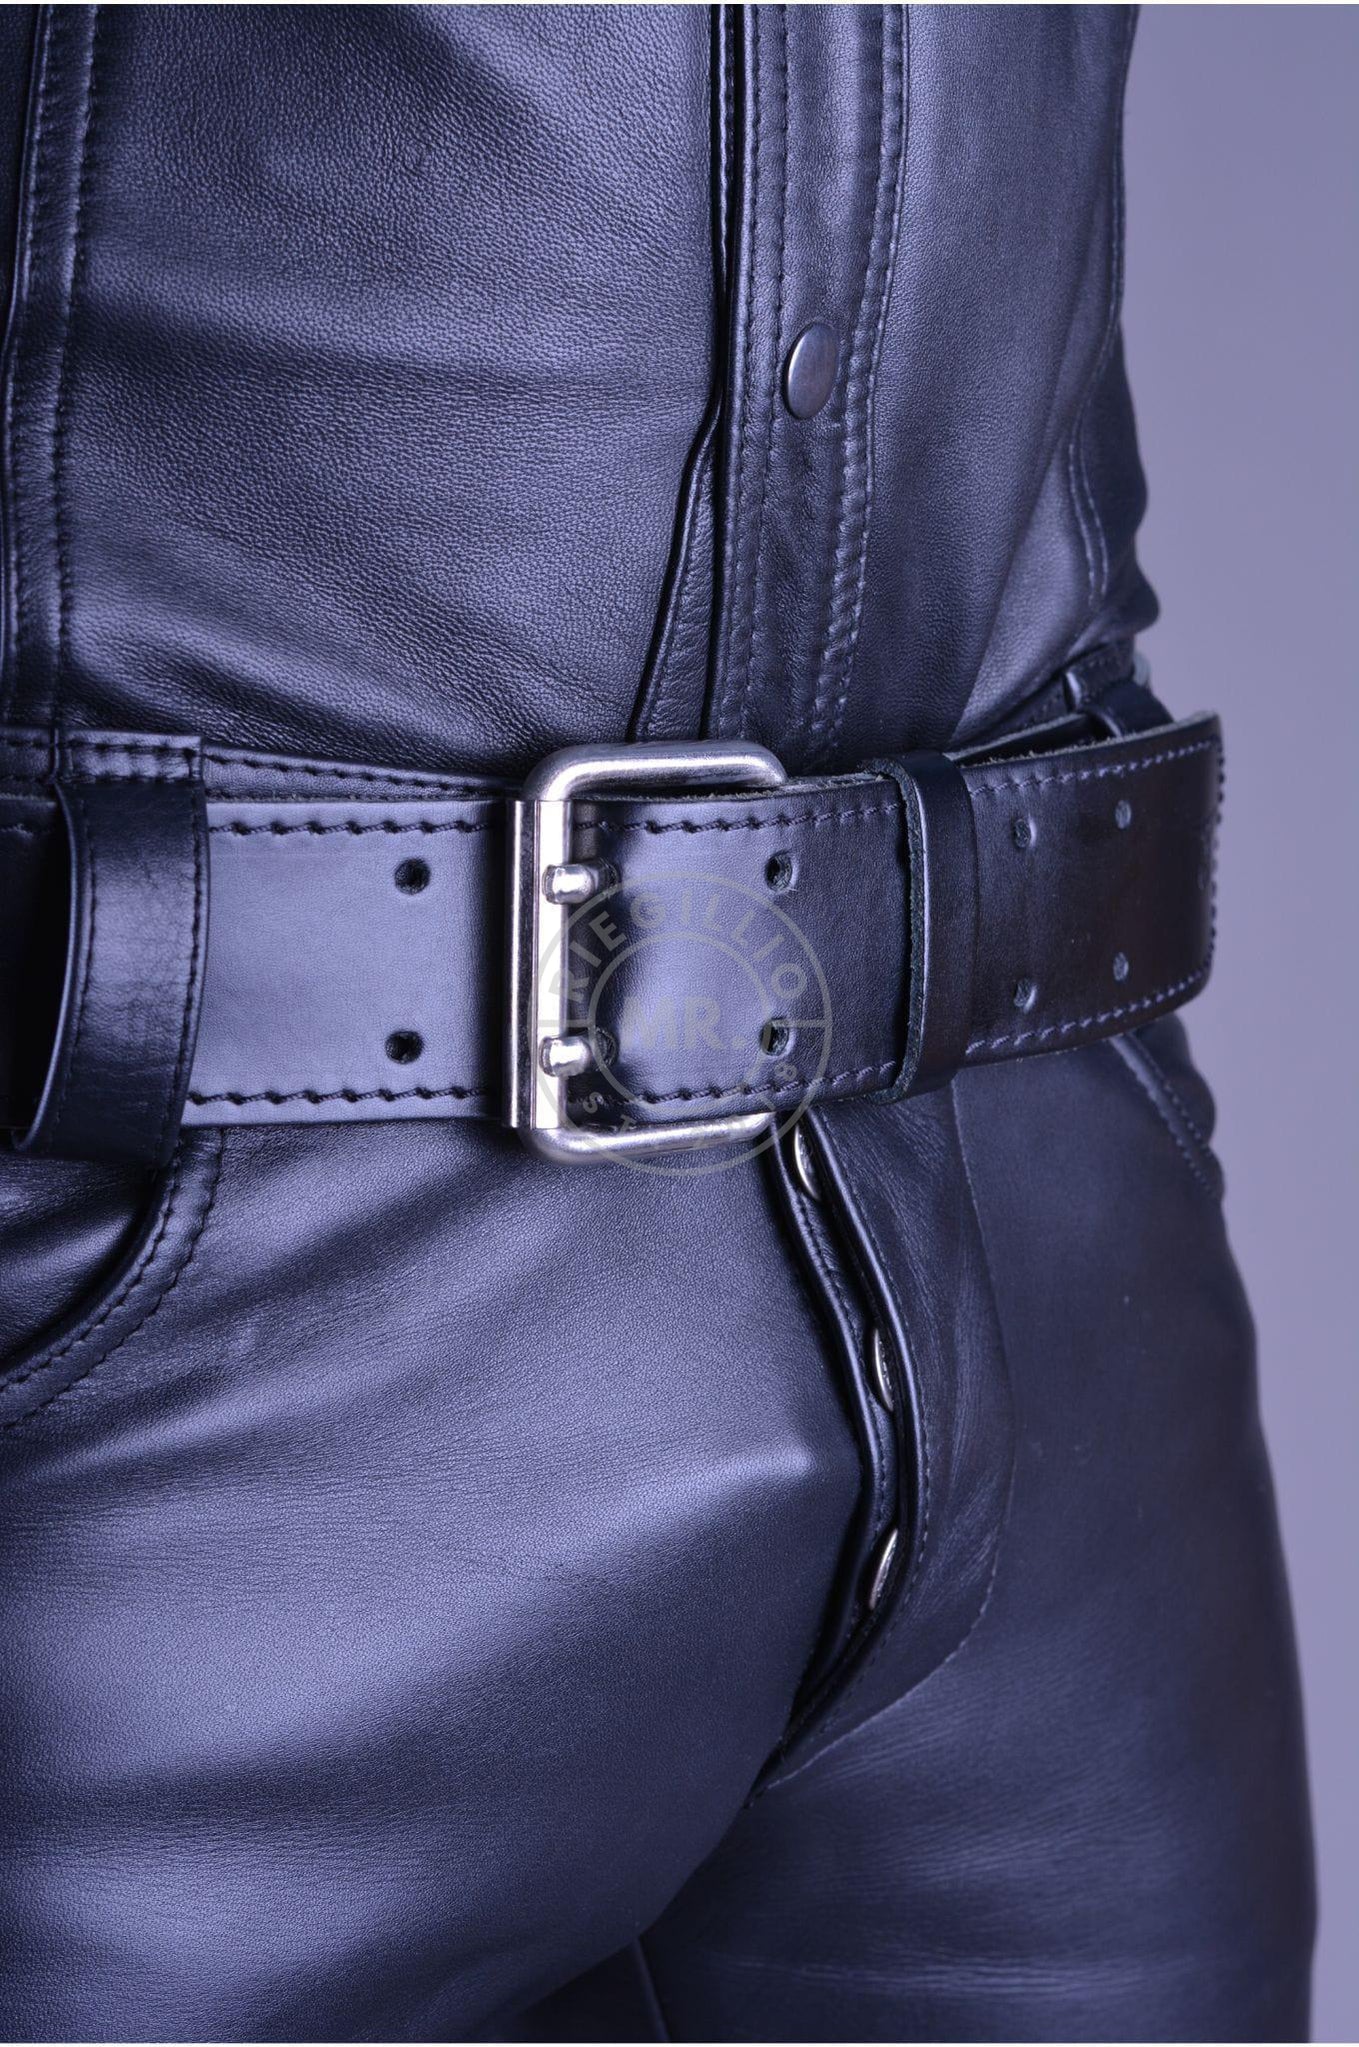 Mister B Leather Belt Stitched 5 cm - Black-at MR. Riegillio